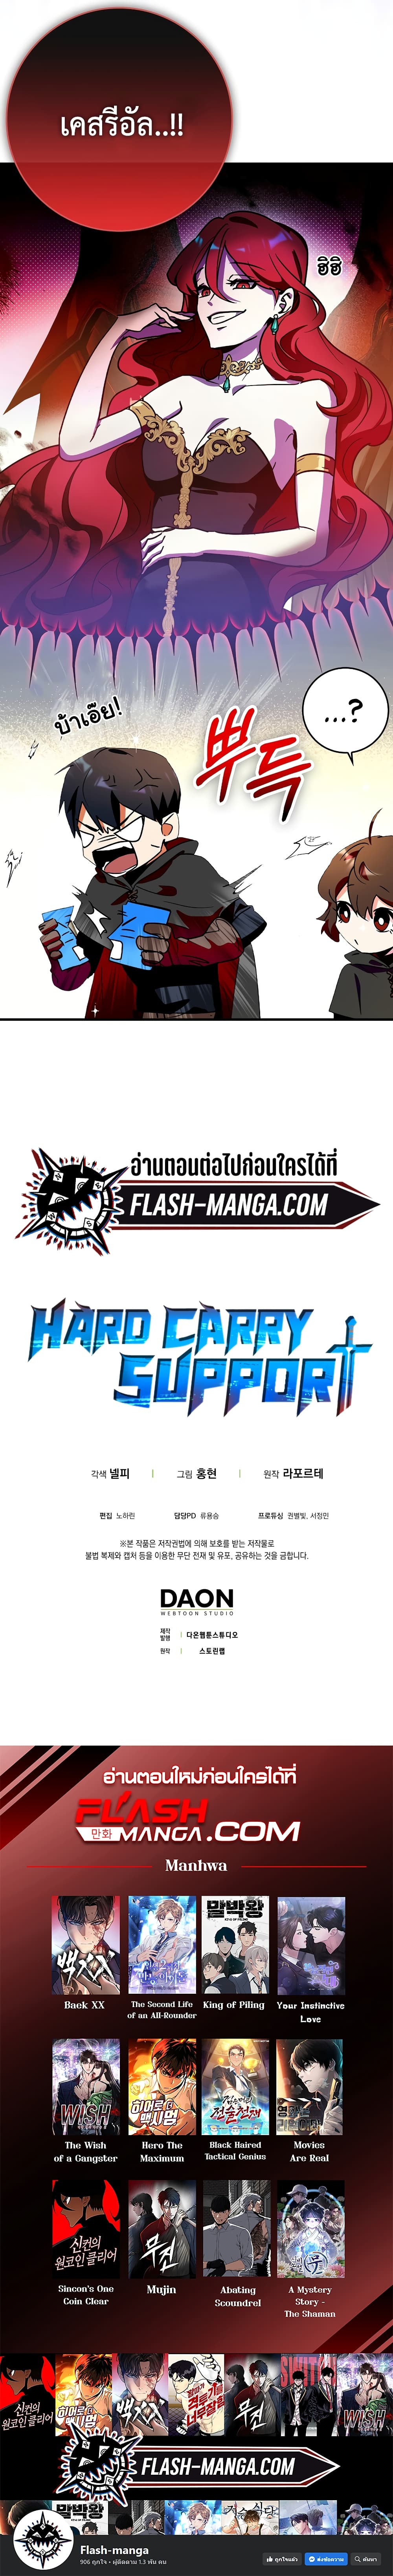 Hard Carry Supporter ร ยธโ€ขร ยธยญร ยธโขร ยธโ€”ร ยธยตร ยนห 9 (14)